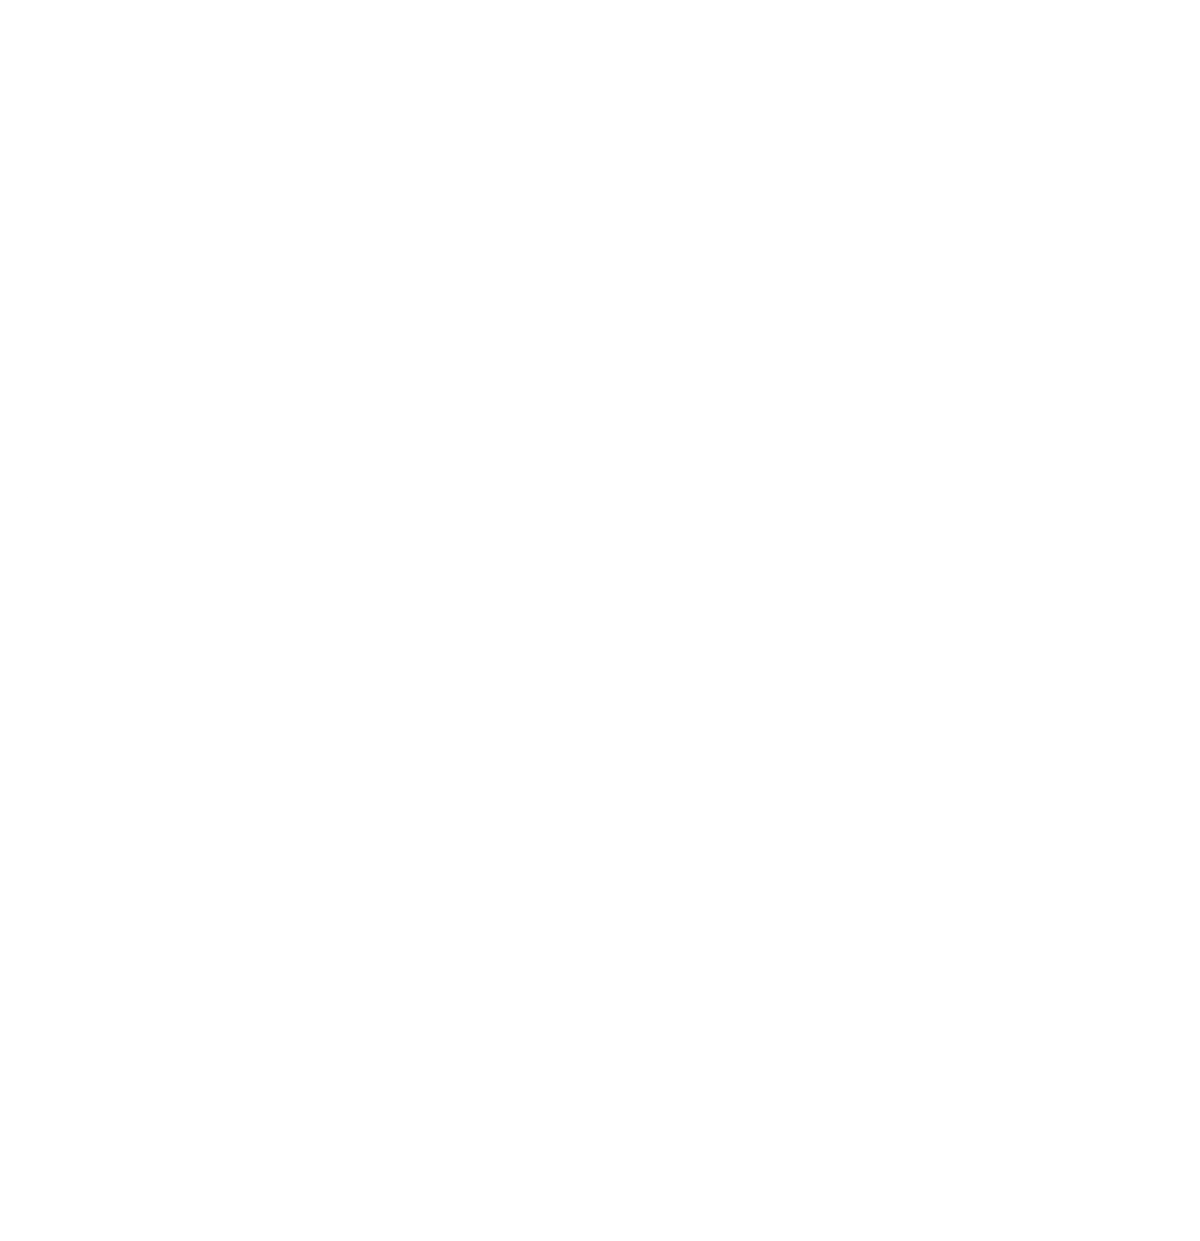 14-Day Trial - Satisfaction Guaranteed